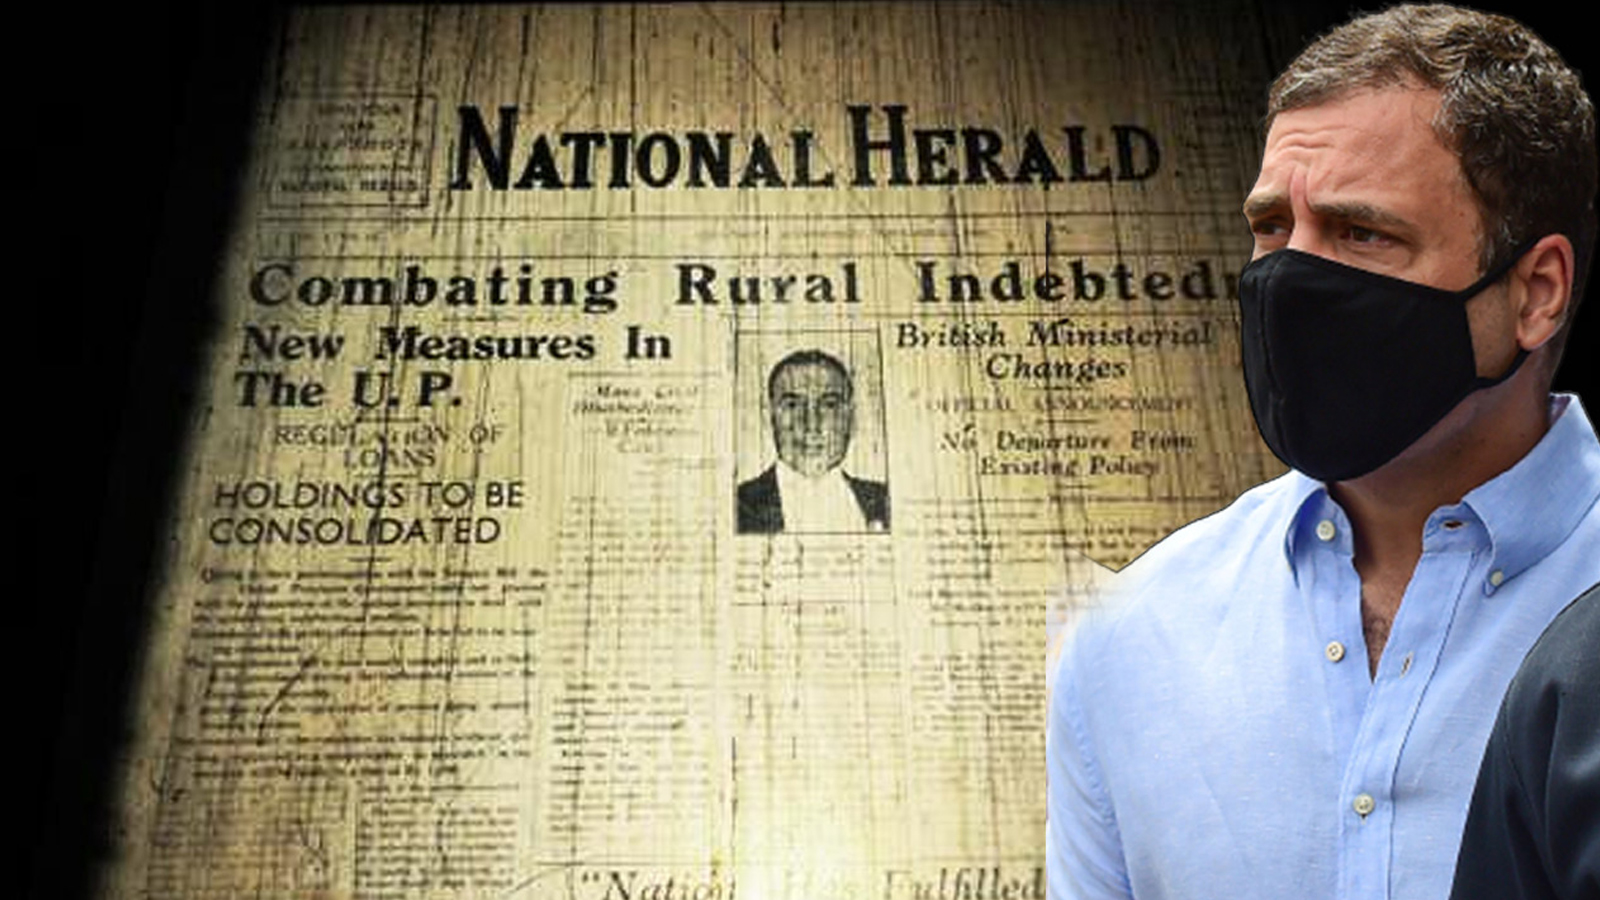 National Herald case